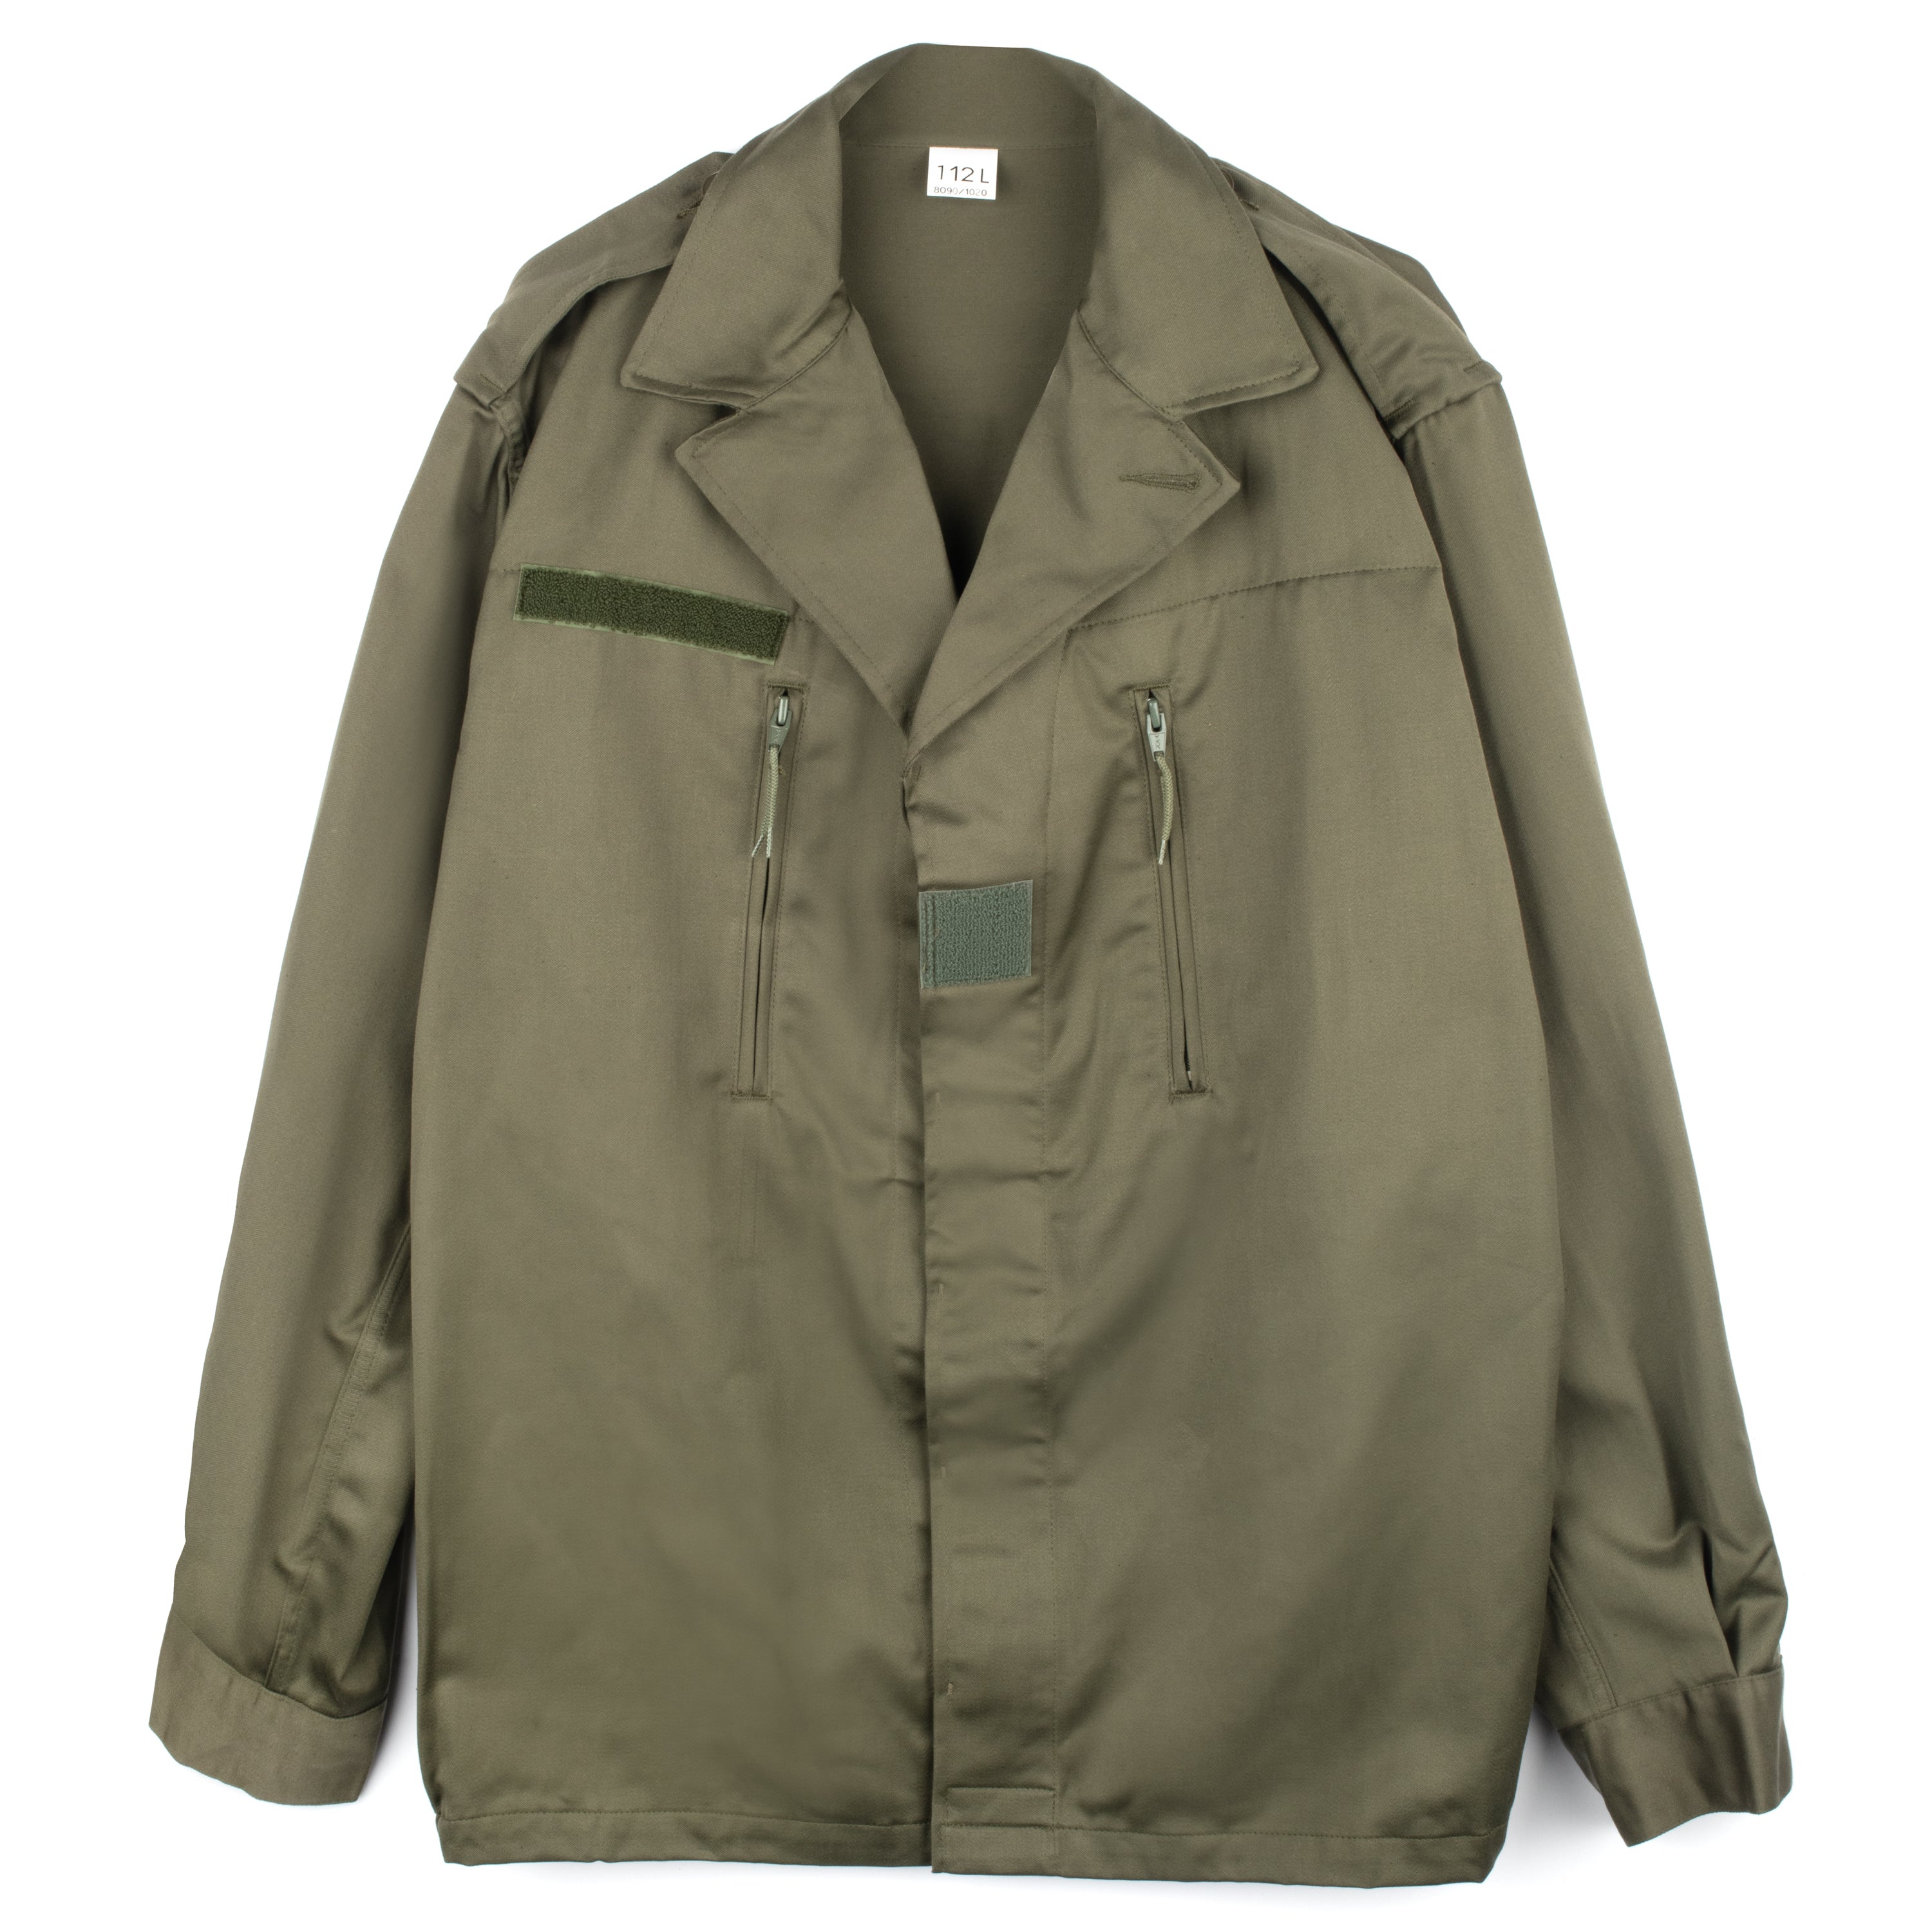 Buy Jacket French F2 Combat | New for USD 39.99 | Swisslink